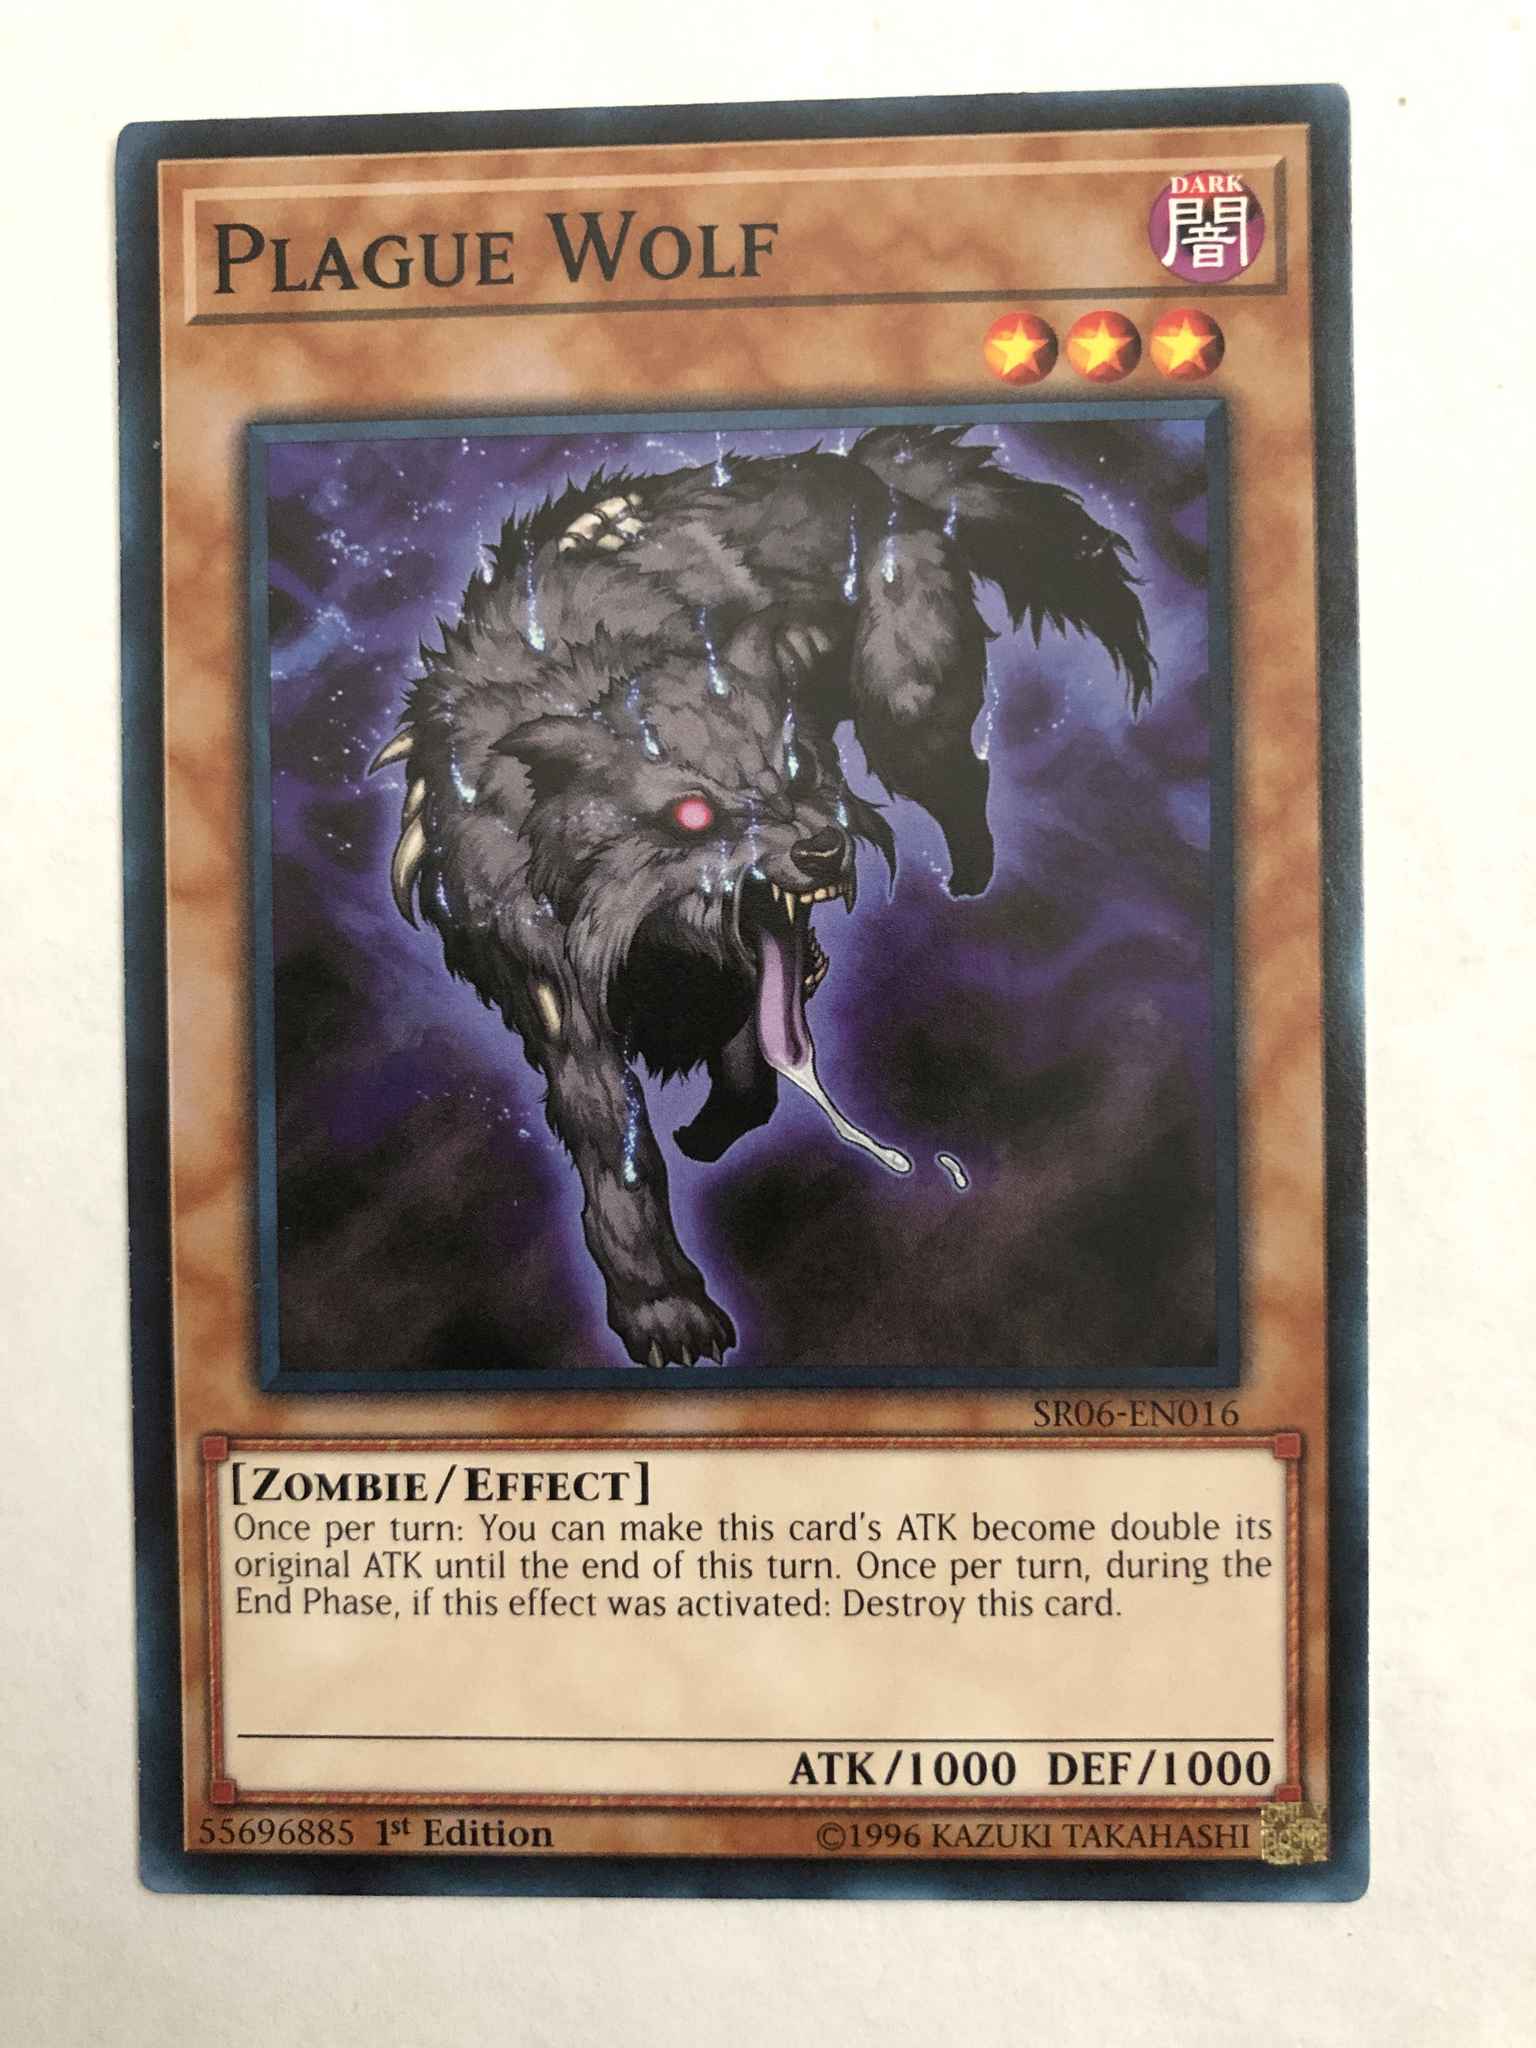 Yu-Gi-Oh: PLAGUE WOLF Common Card 1st Edition SR06-EN016 